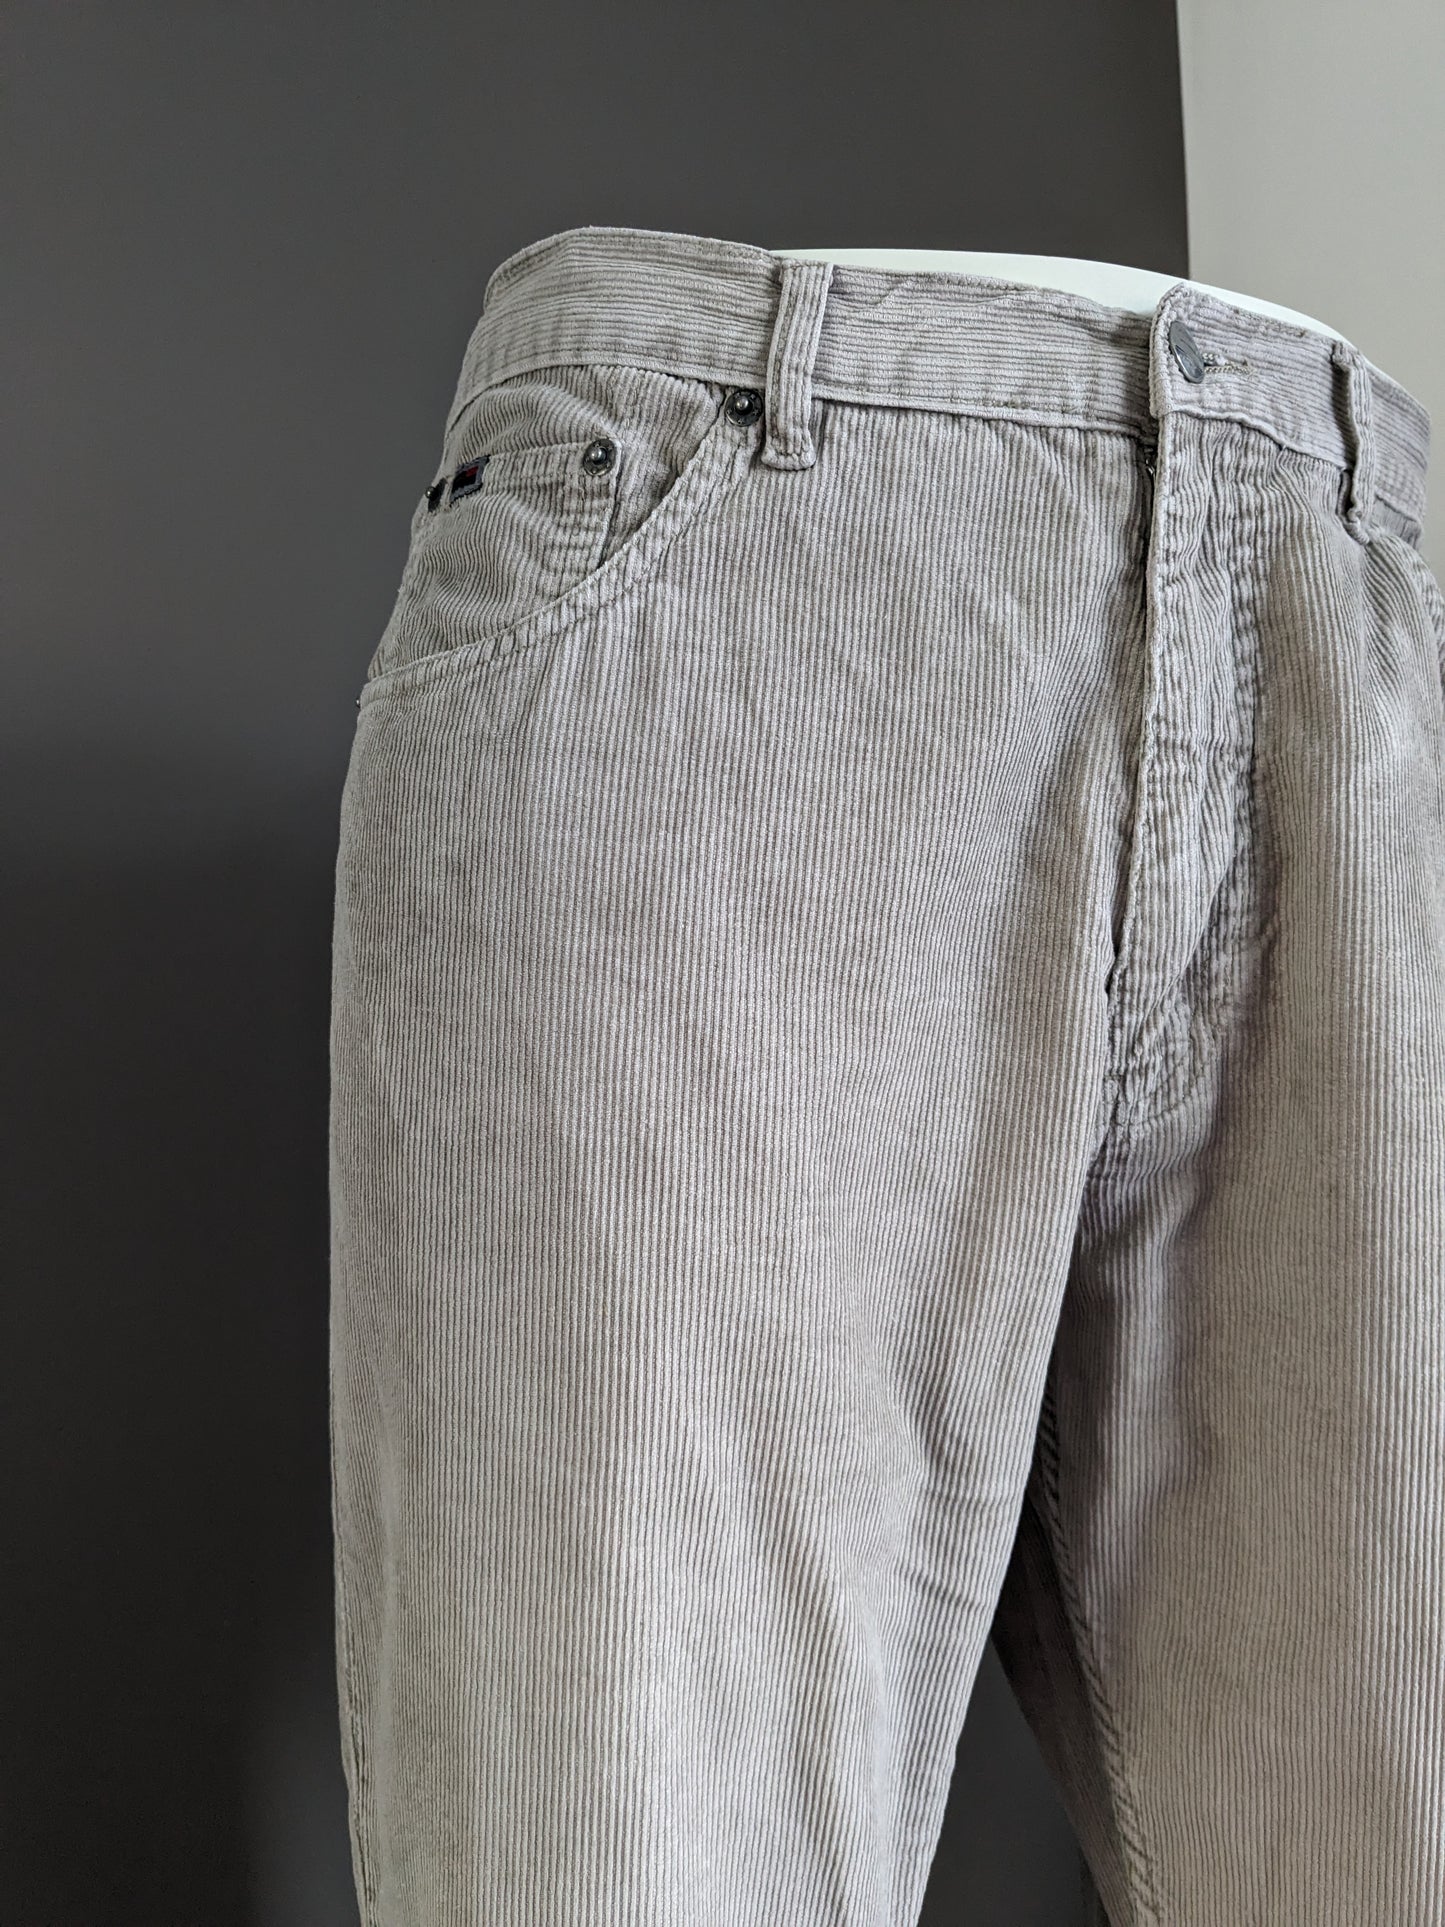 Vintage canor rib pants. Beige. Size W34 - L30.